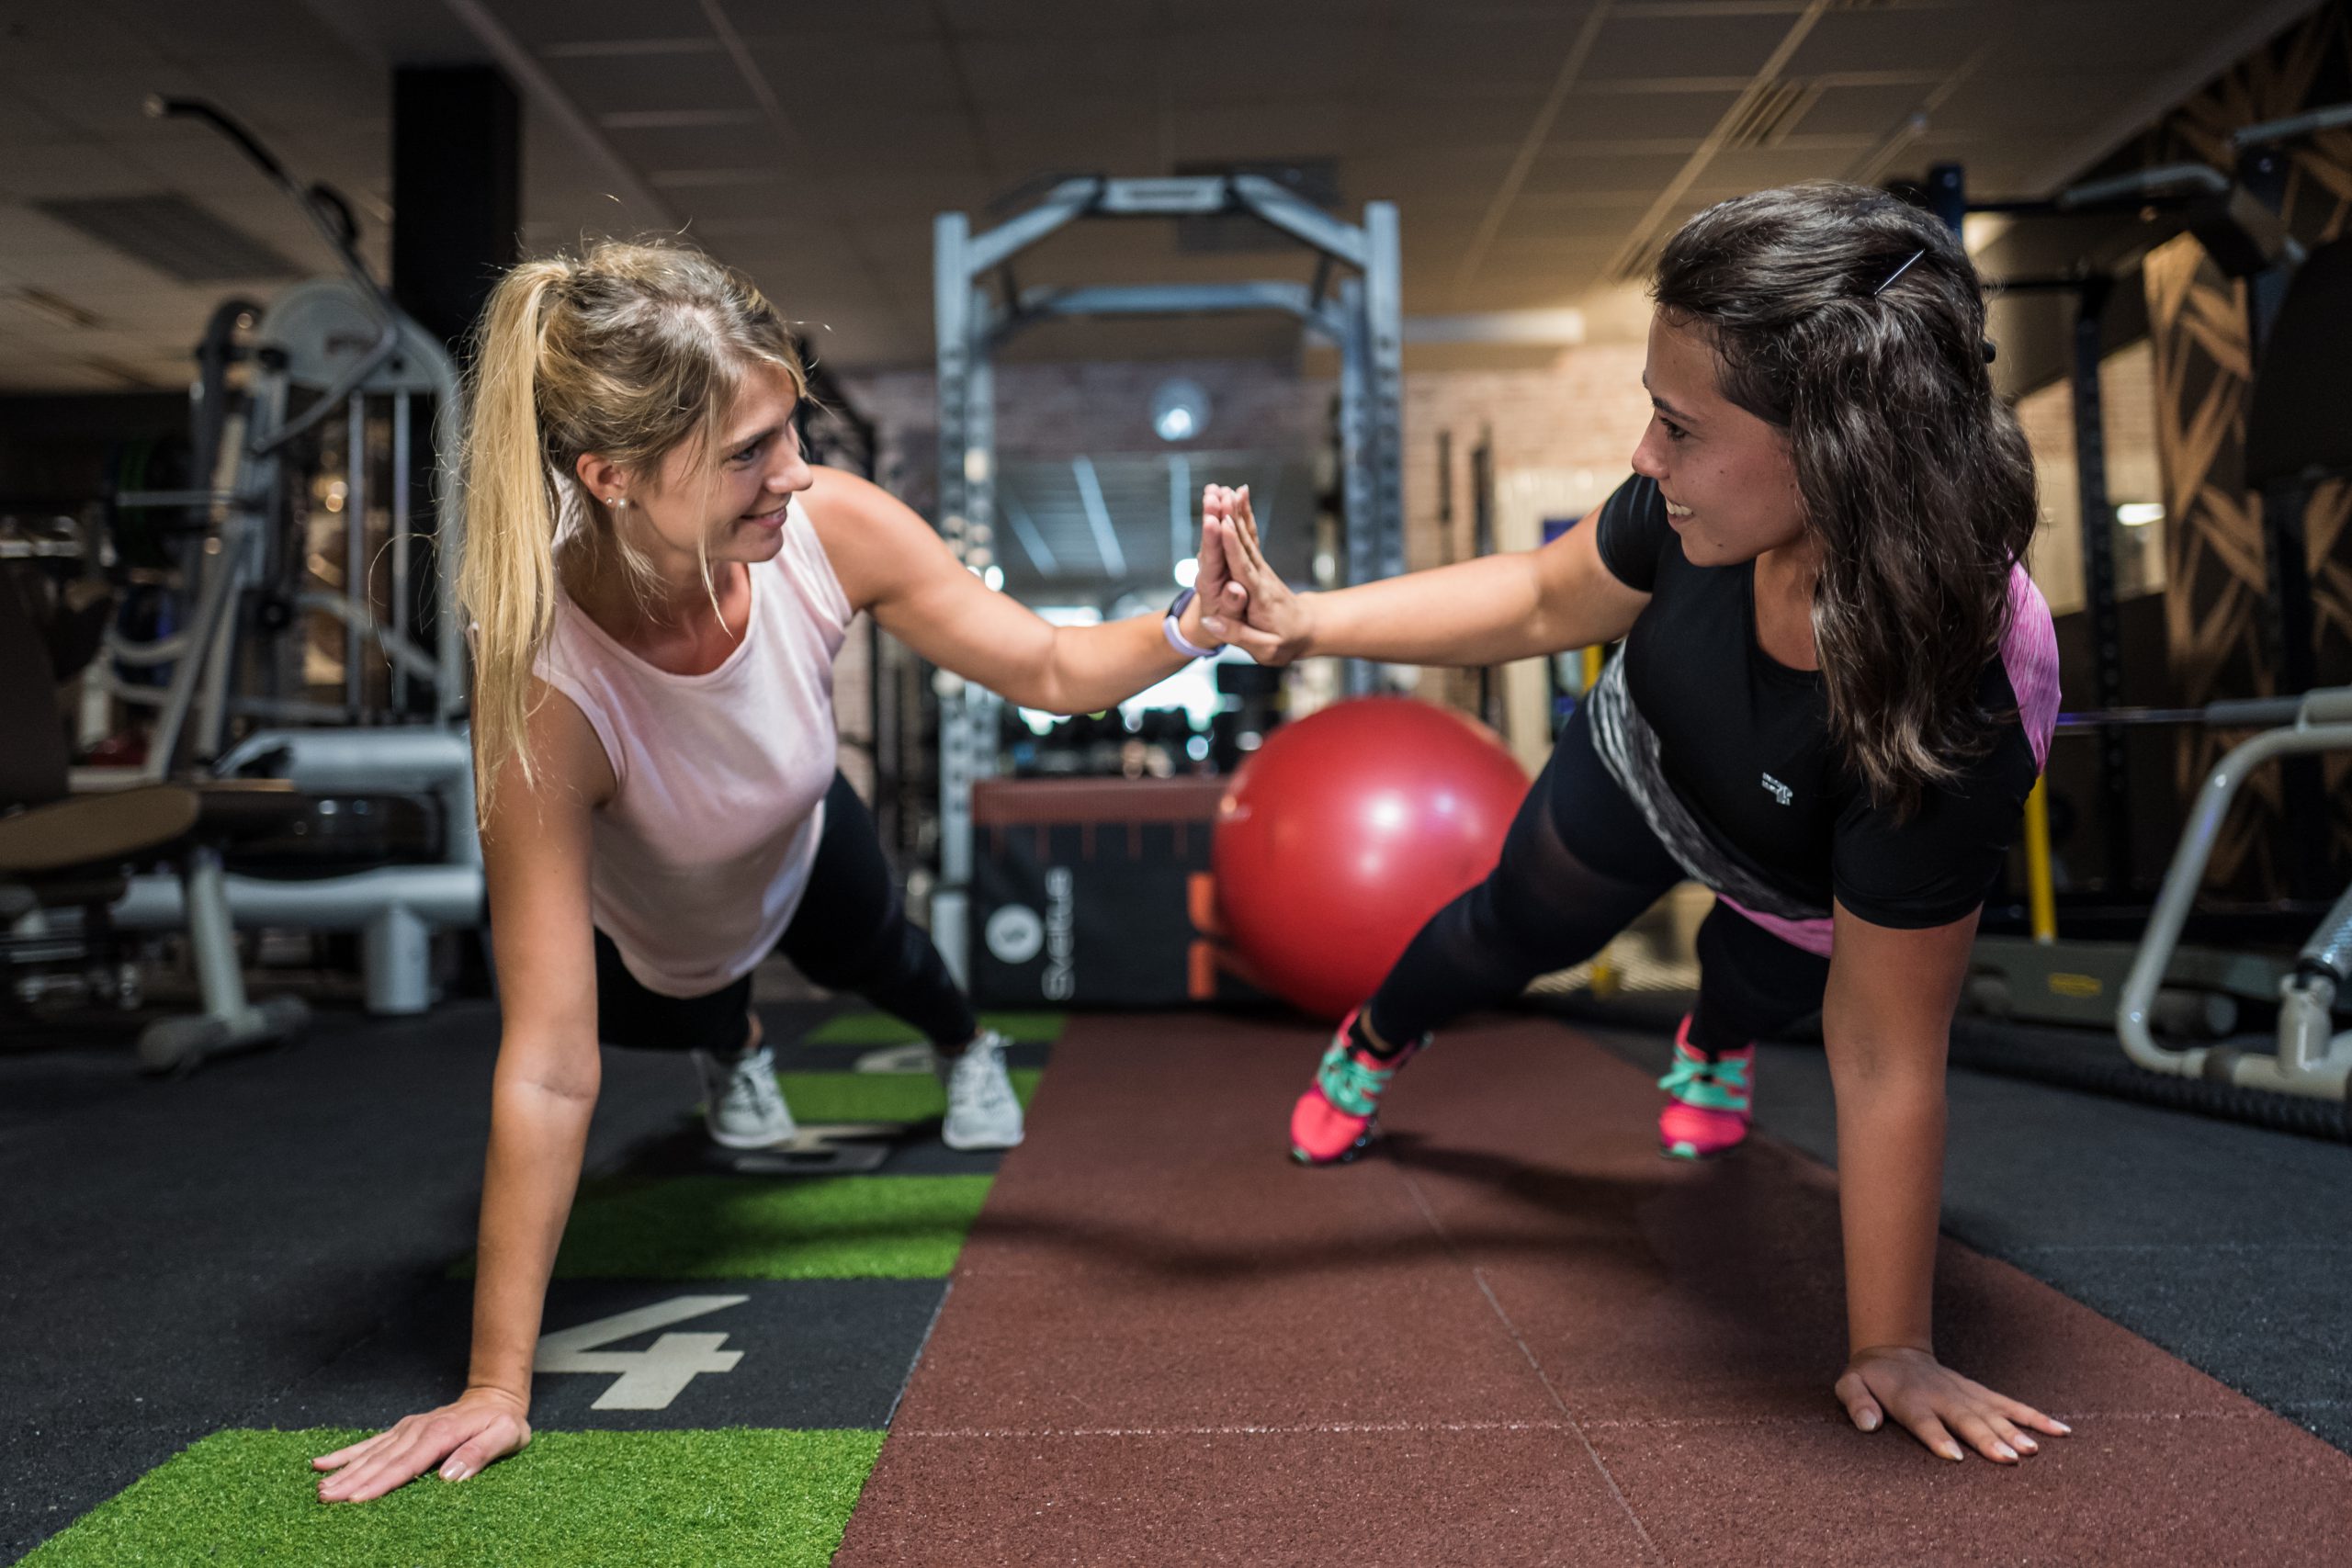 Zwei sportliche Mädels beim Fotoshooting im Fitnessstudio Studio21 in Nürnberg